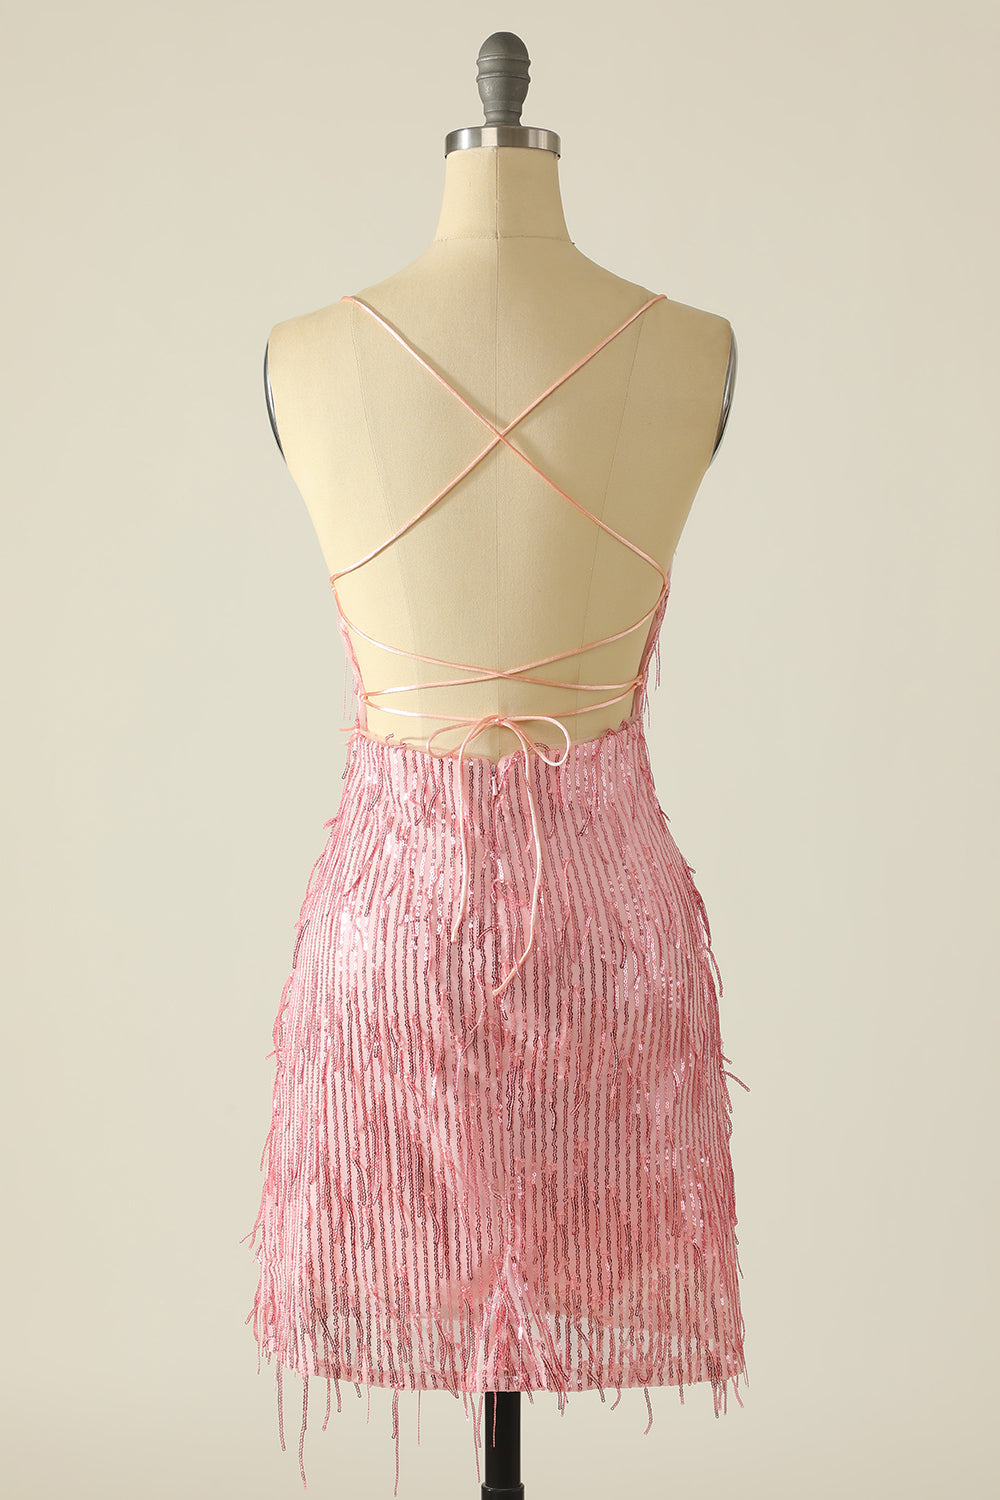 Sheath Spaghetti Straps Pink Sequins Short Homecoming Dress